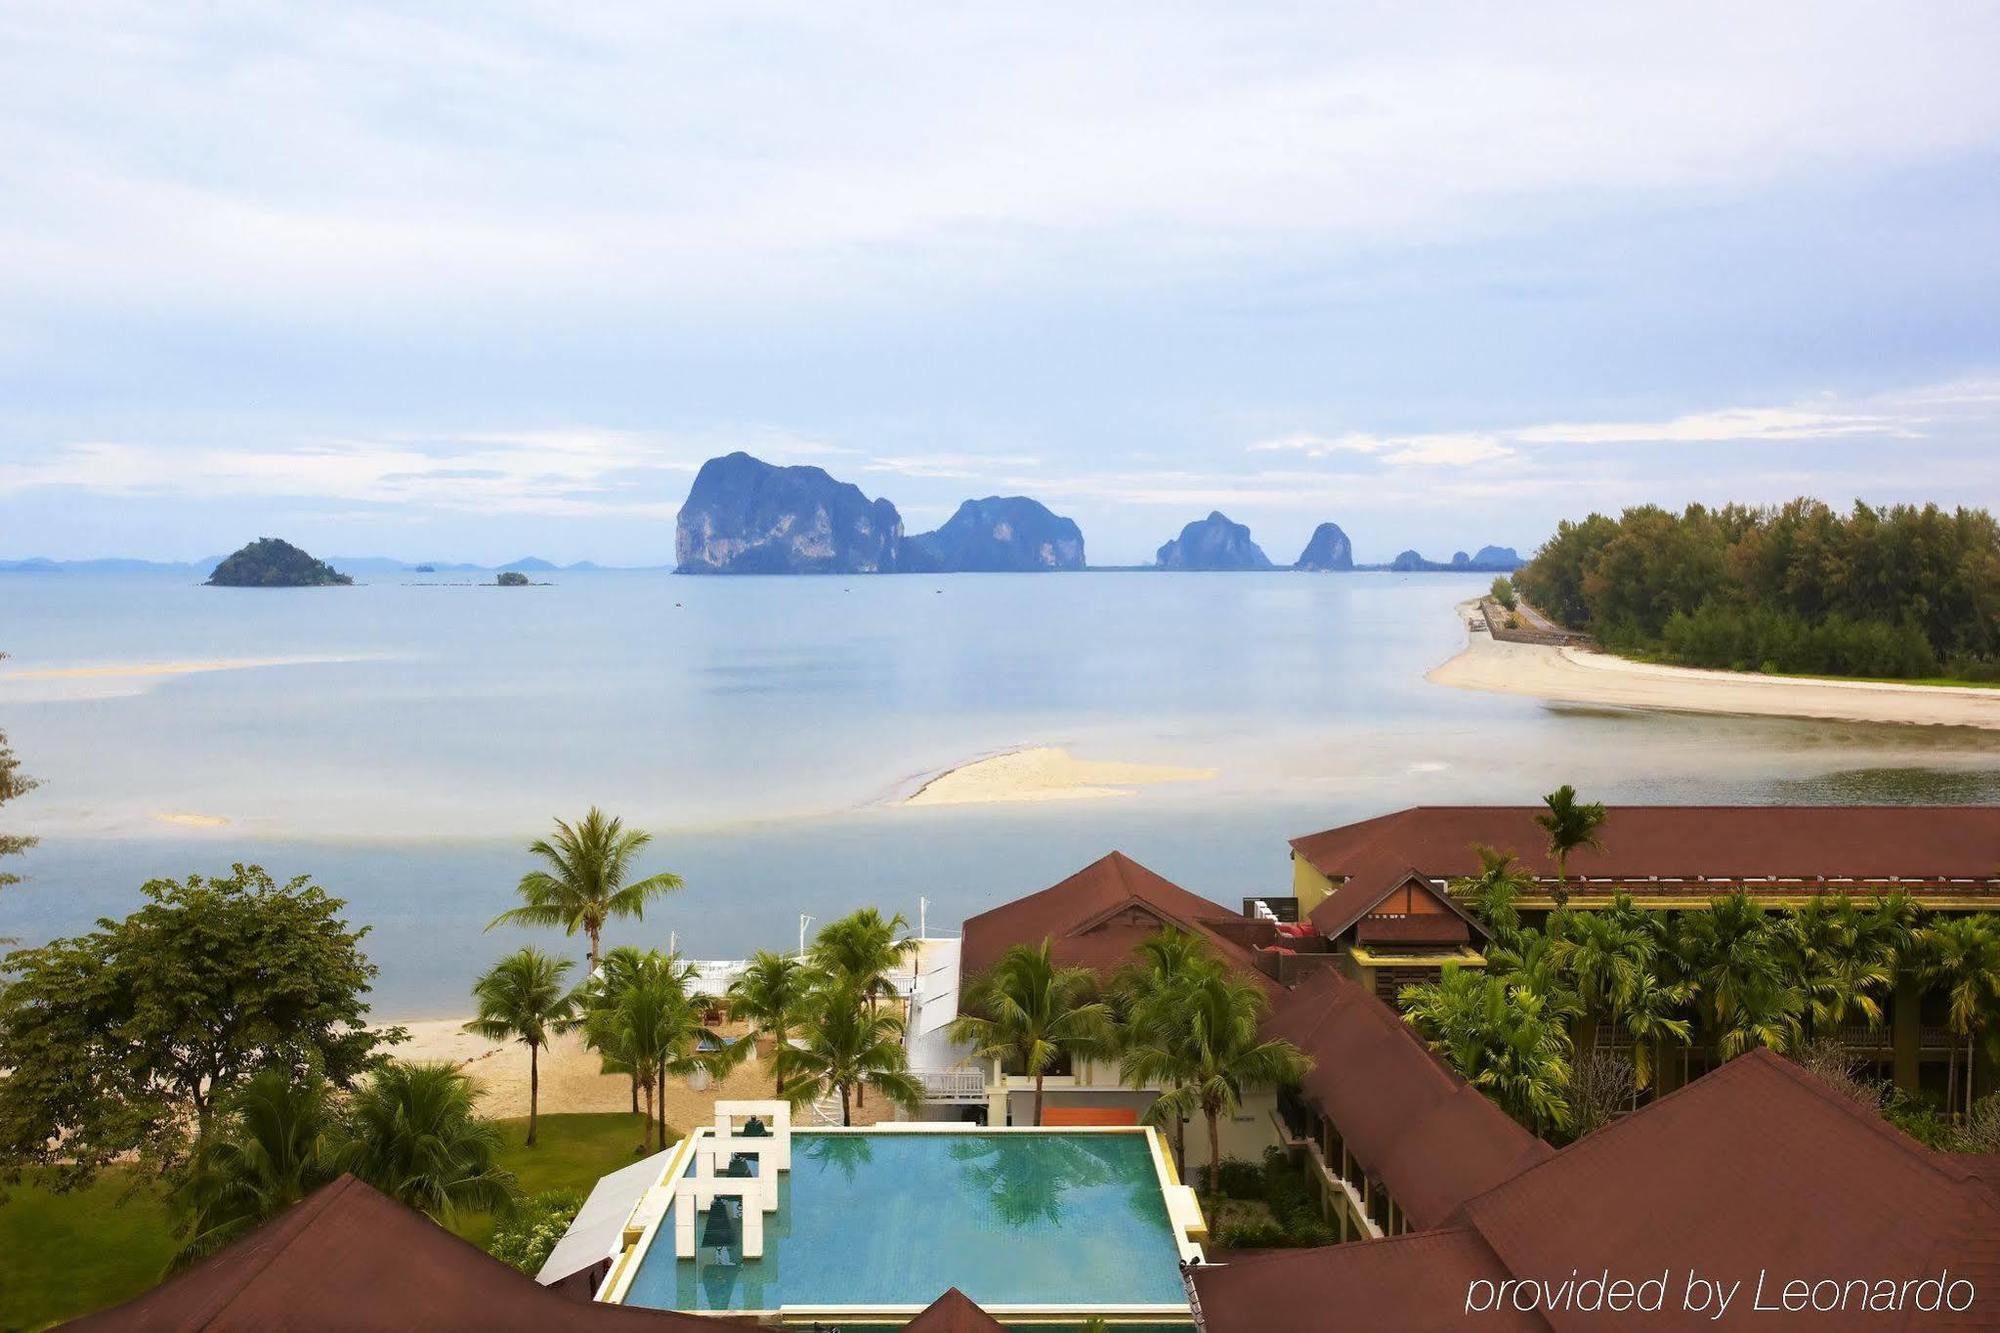 HOTEL SI KAO RESORT TRANG 5* (Thailand) - from US$ 187 | BOOKED